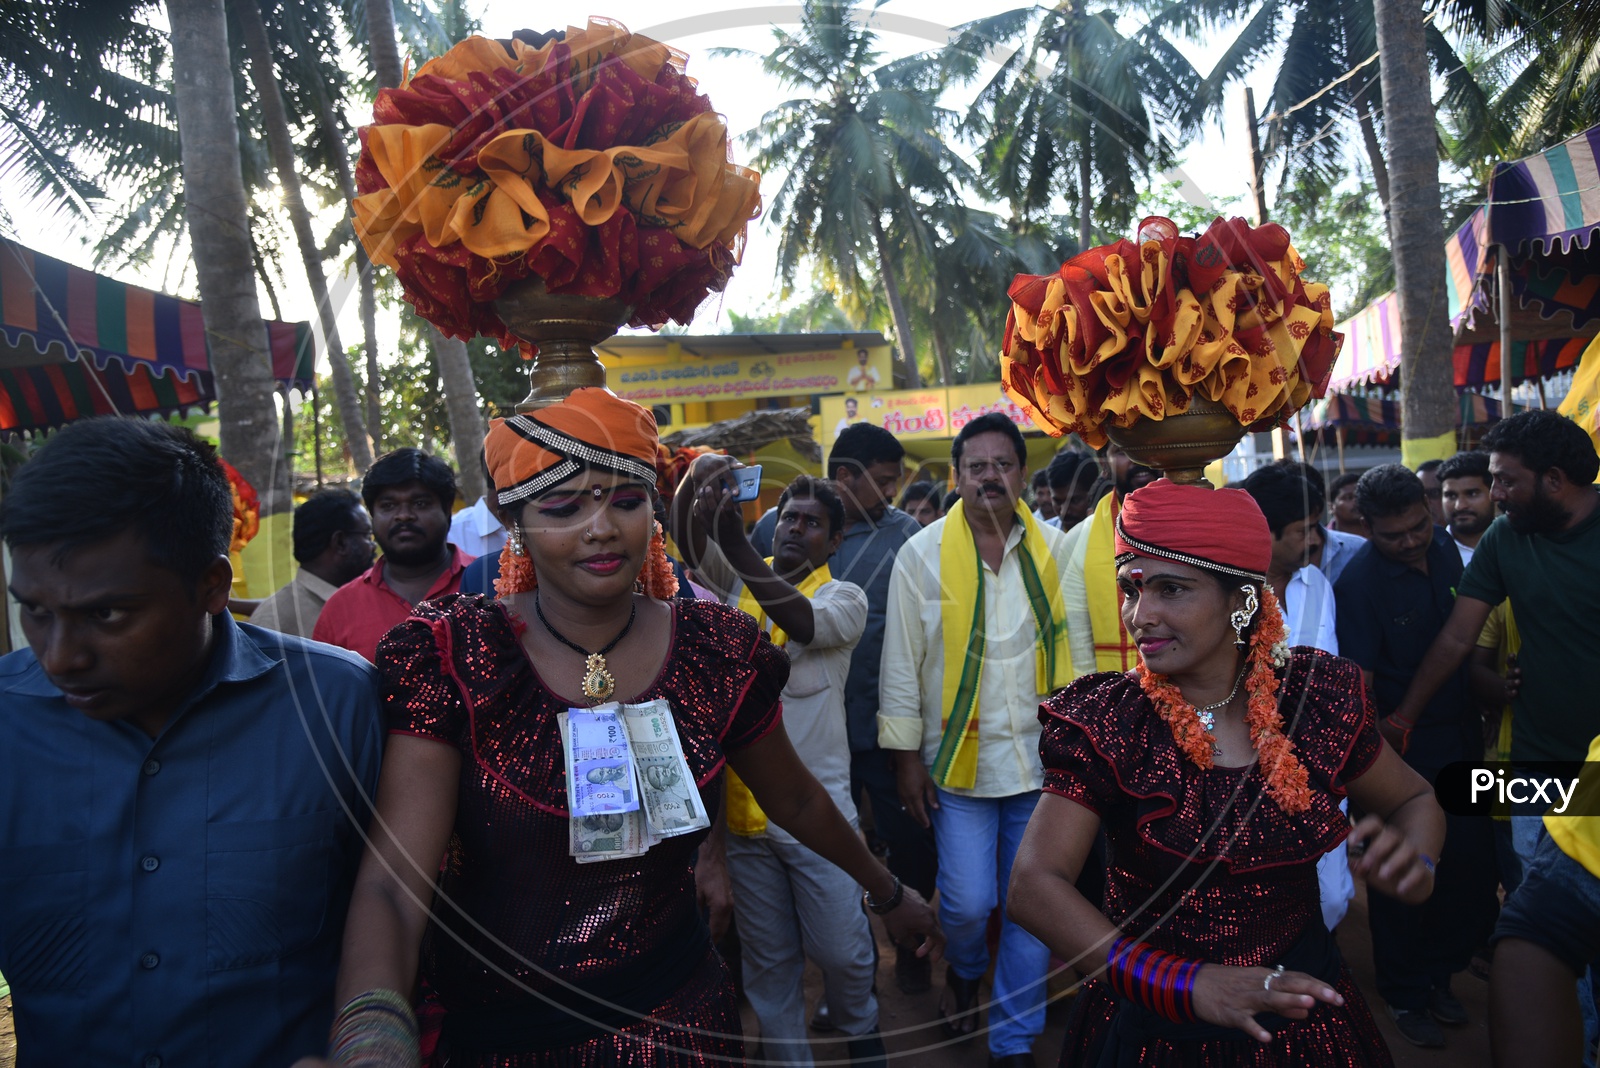 Garaga folk dance being performed ahead of TDP election campaign rally in Amalapuram